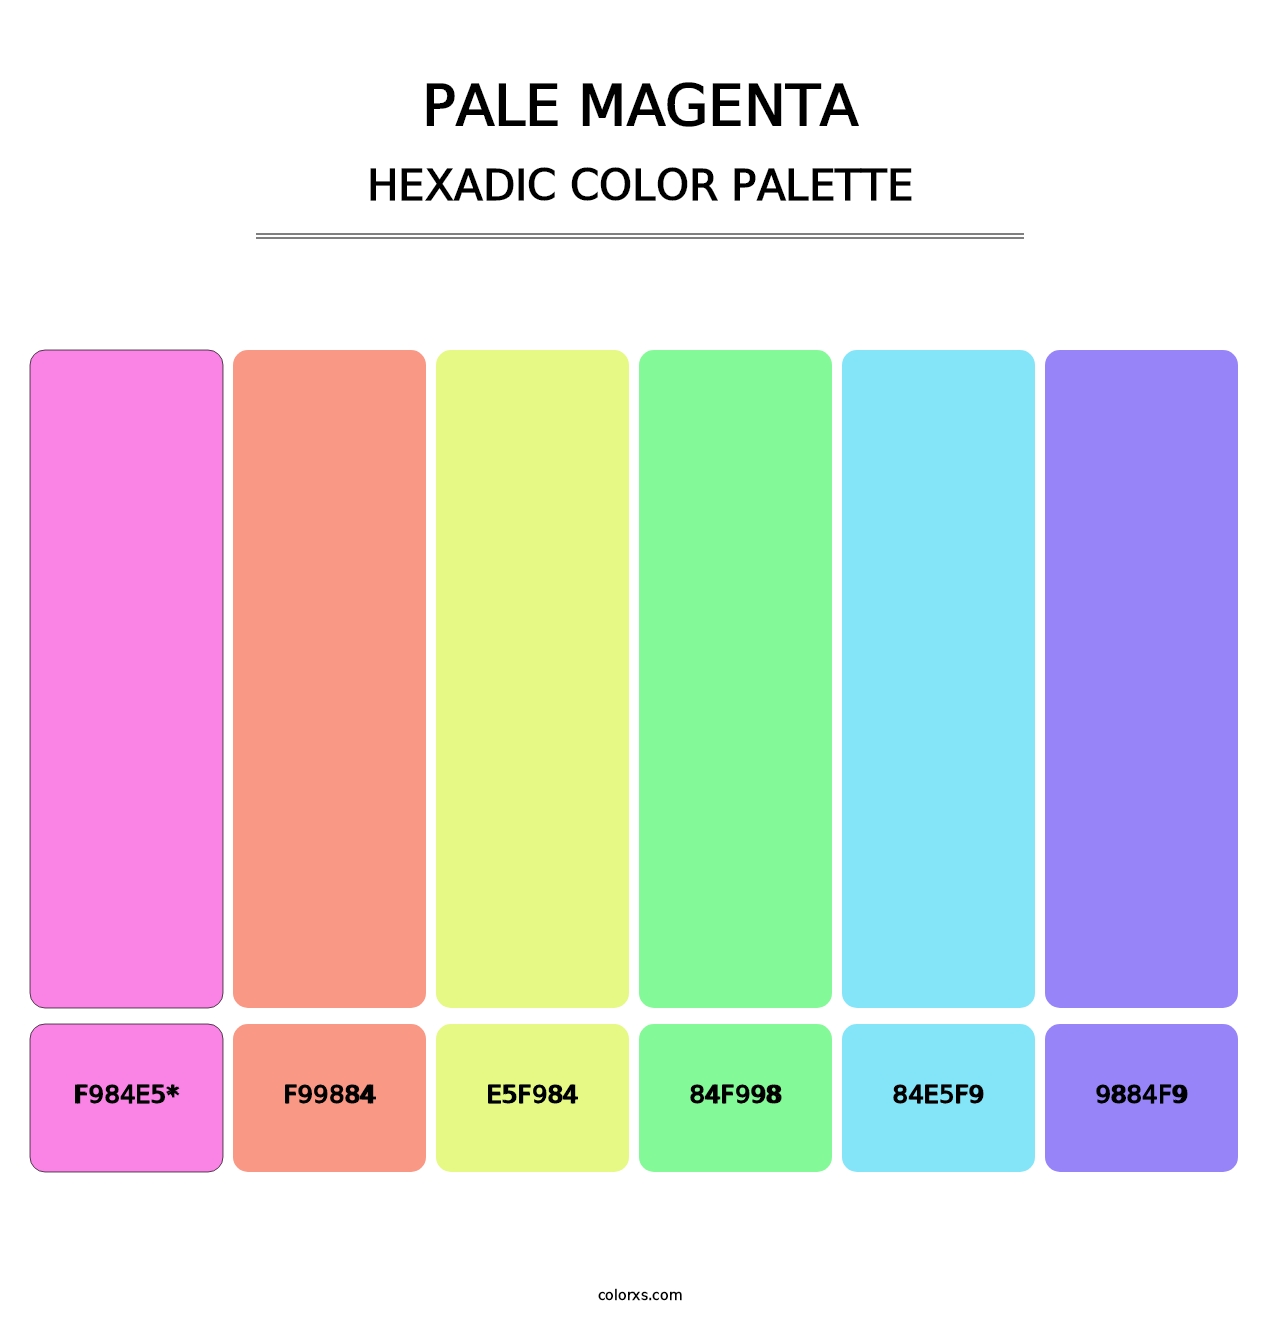 Pale Magenta - Hexadic Color Palette